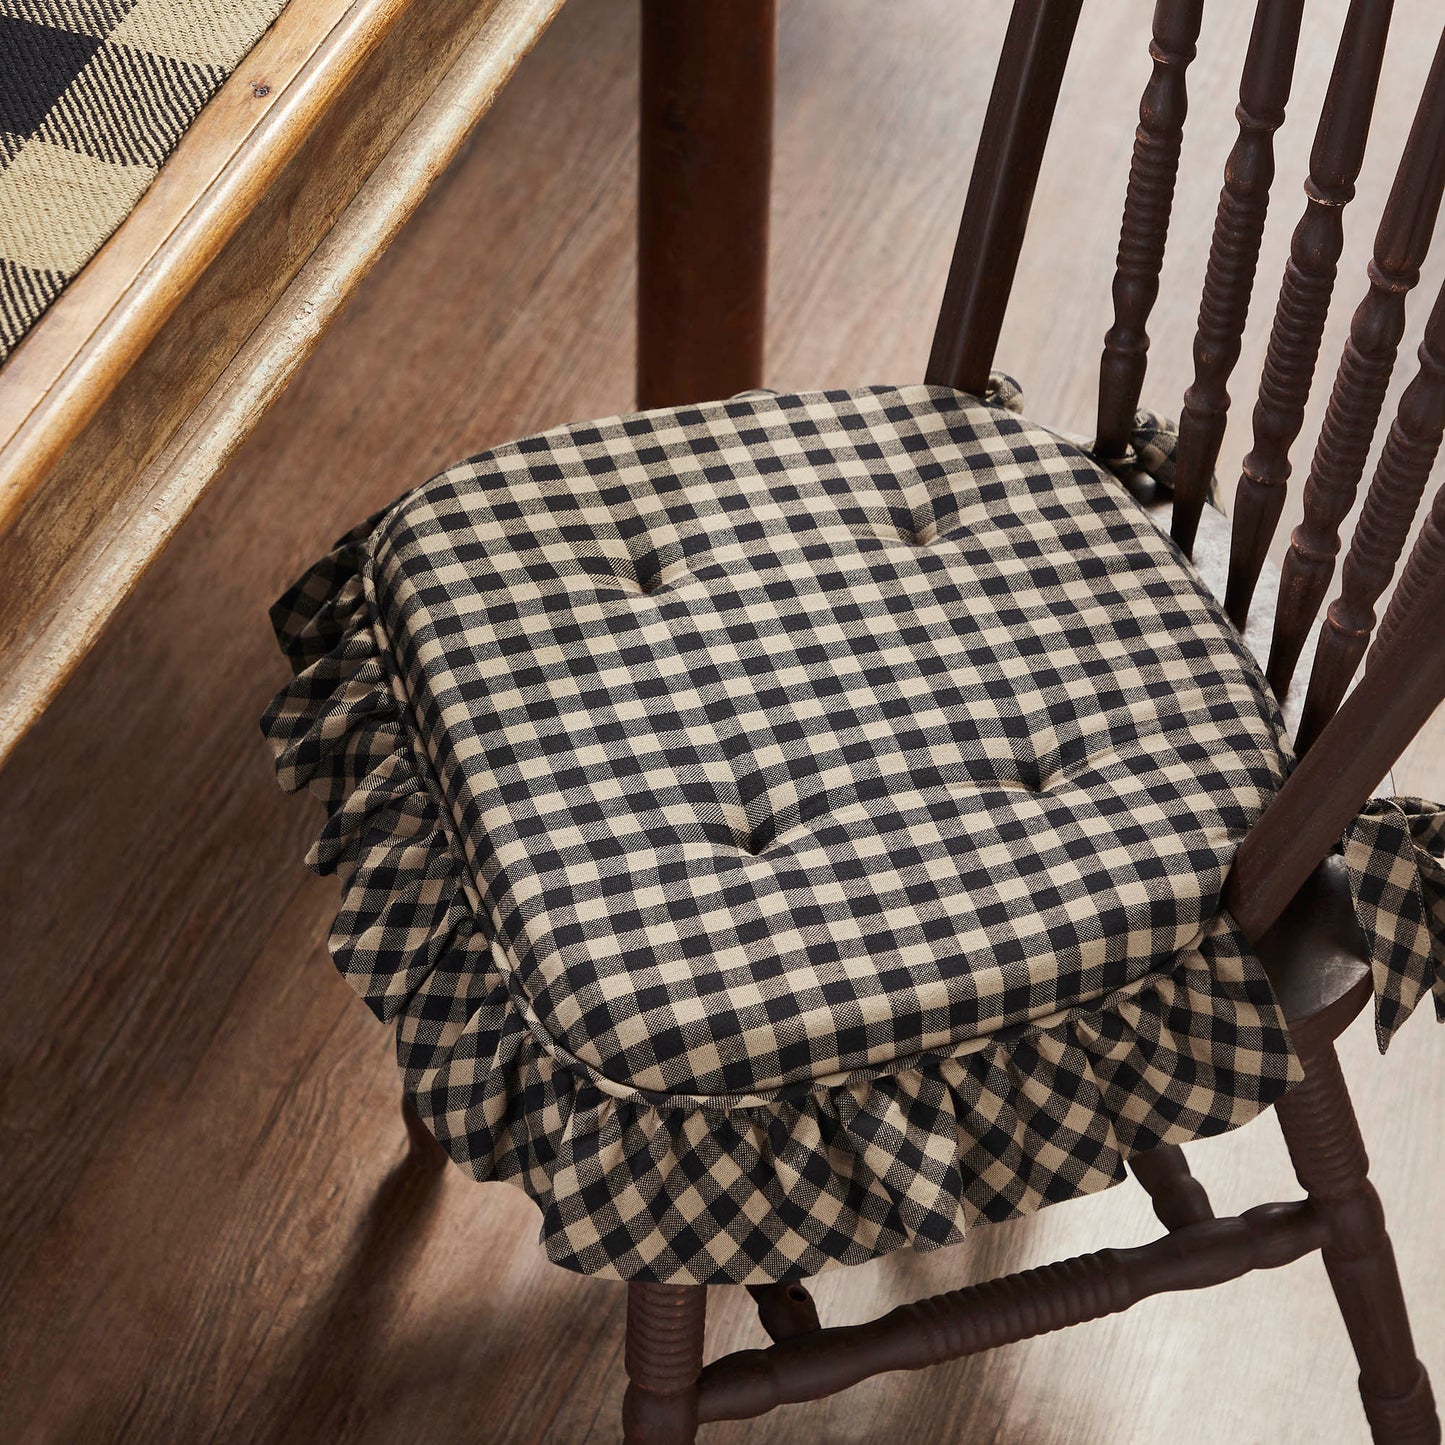 Black Check Ruffled Chair Pad 16.5x18 SpadezStore